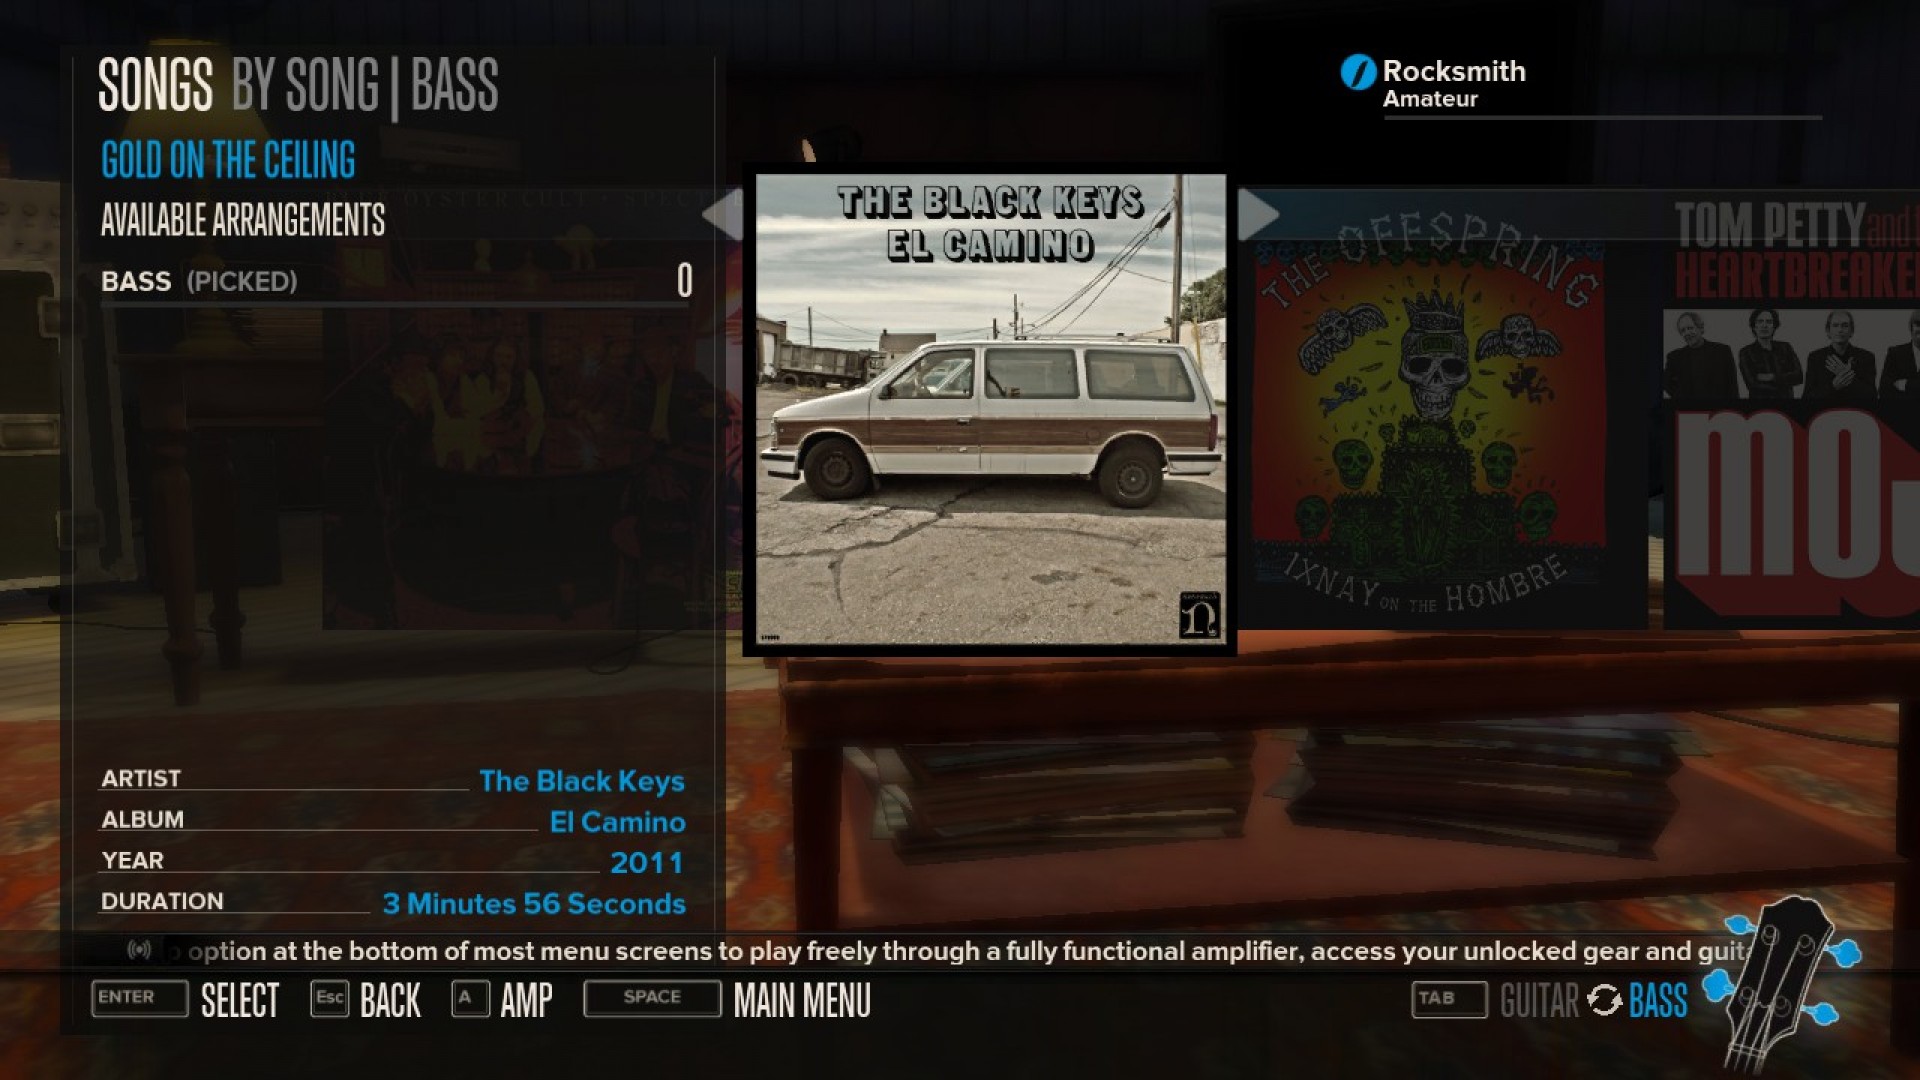 Rocksmith - The Black Keys - Gold on the Ceiling screenshot